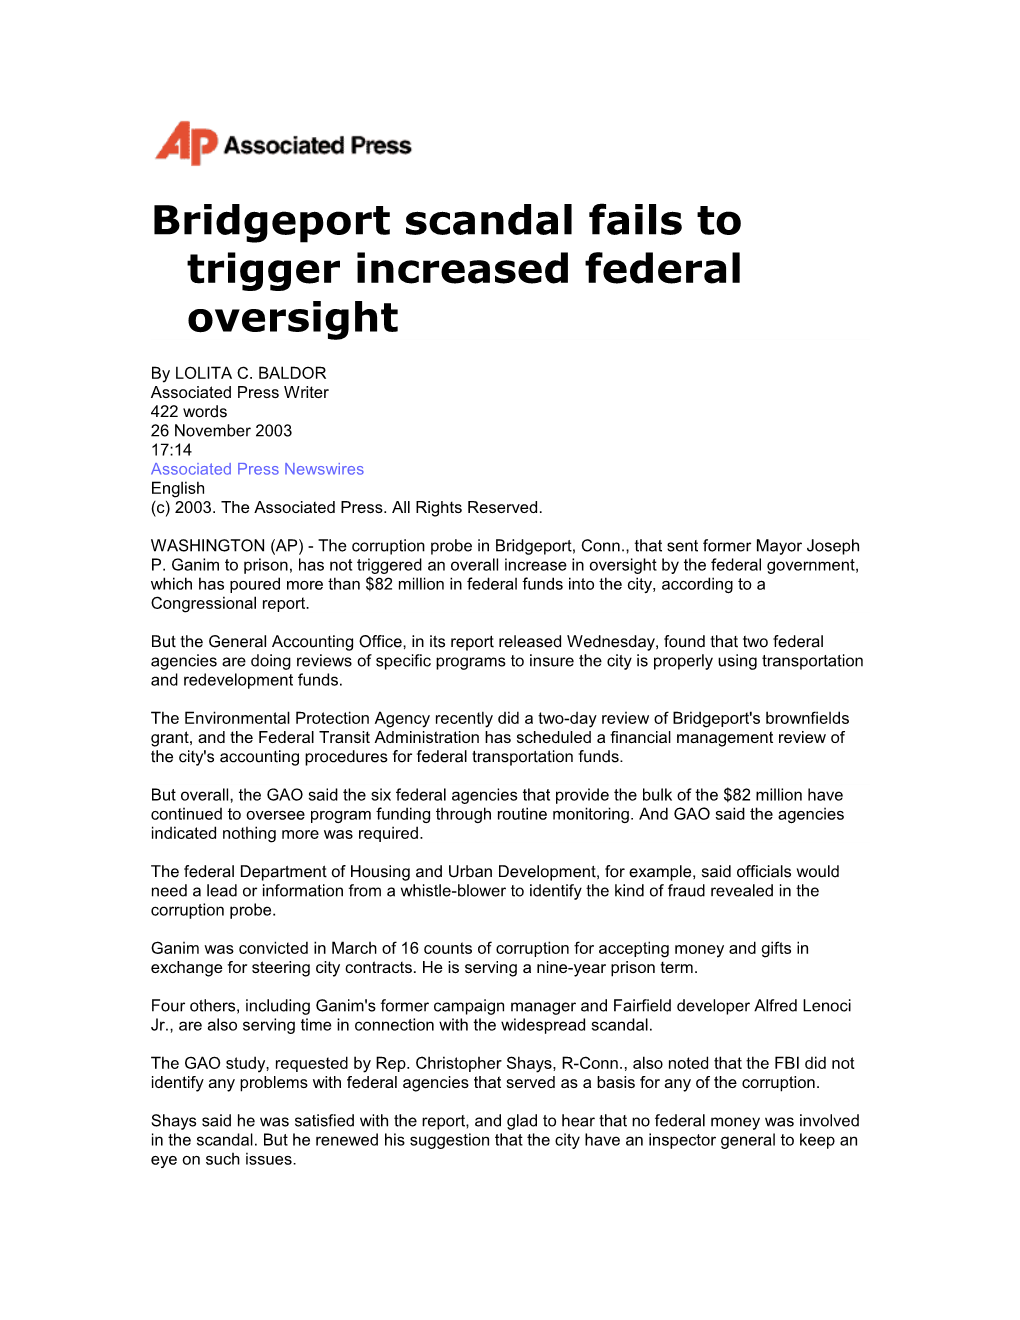 Bridgeport Scandal Fails to Trigger Increased Federal Oversight